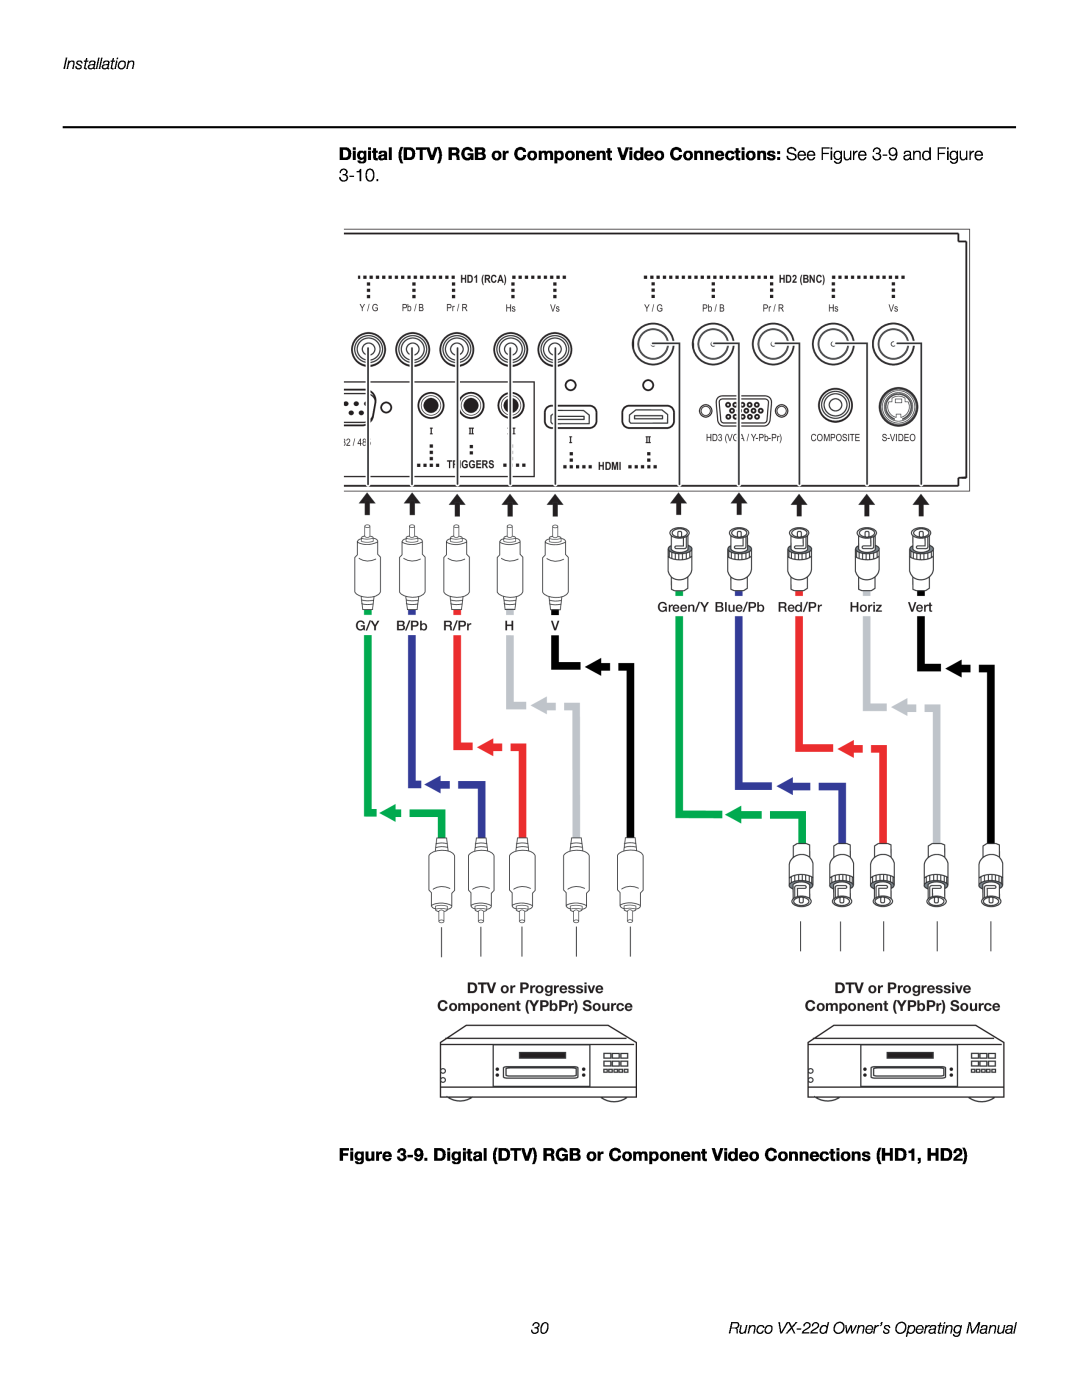 Runco VX-22D 9. Digital DTV RGB or Component Video Connections HD1, HD2, Installation, B/Pb, R/Pr, Green/Y Blue/Pb, Red/Pr 